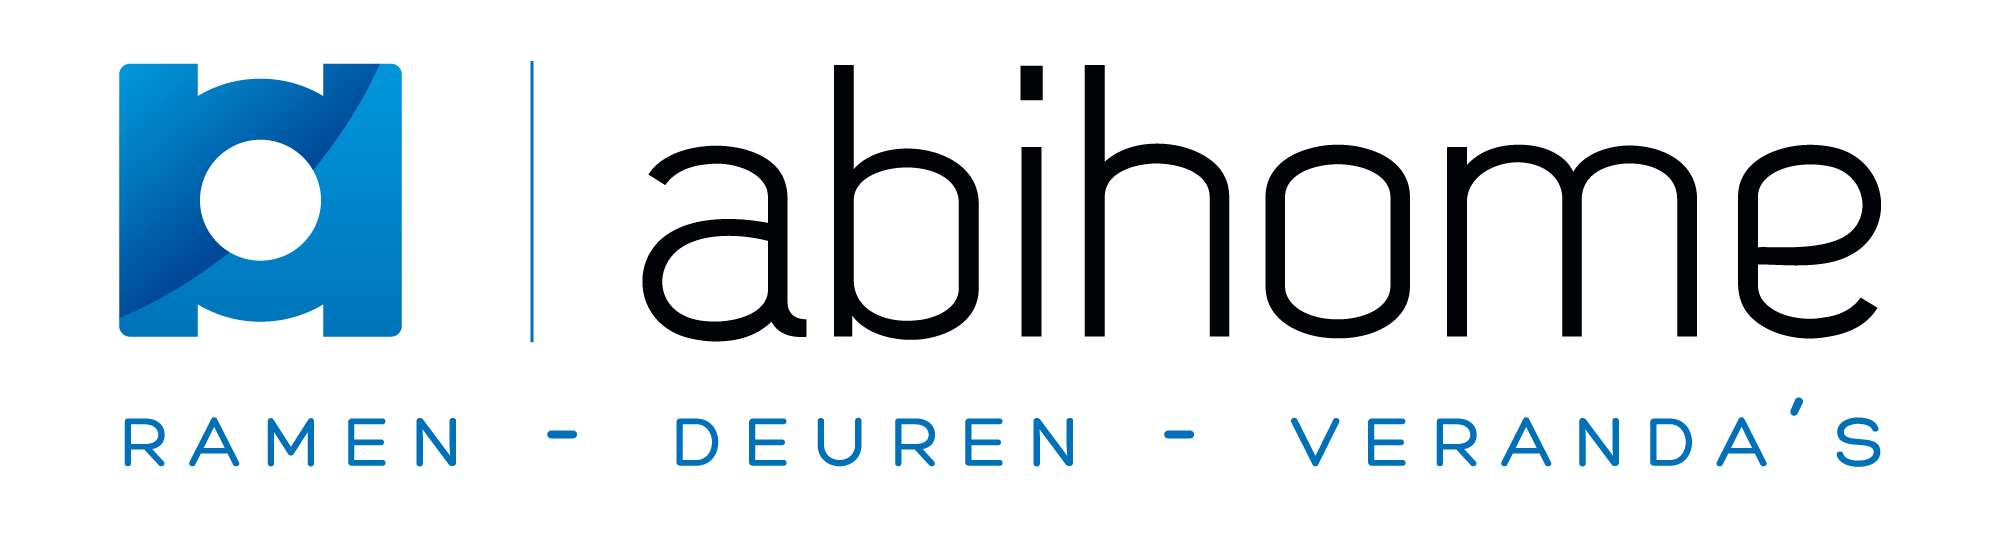 Logo Abihome